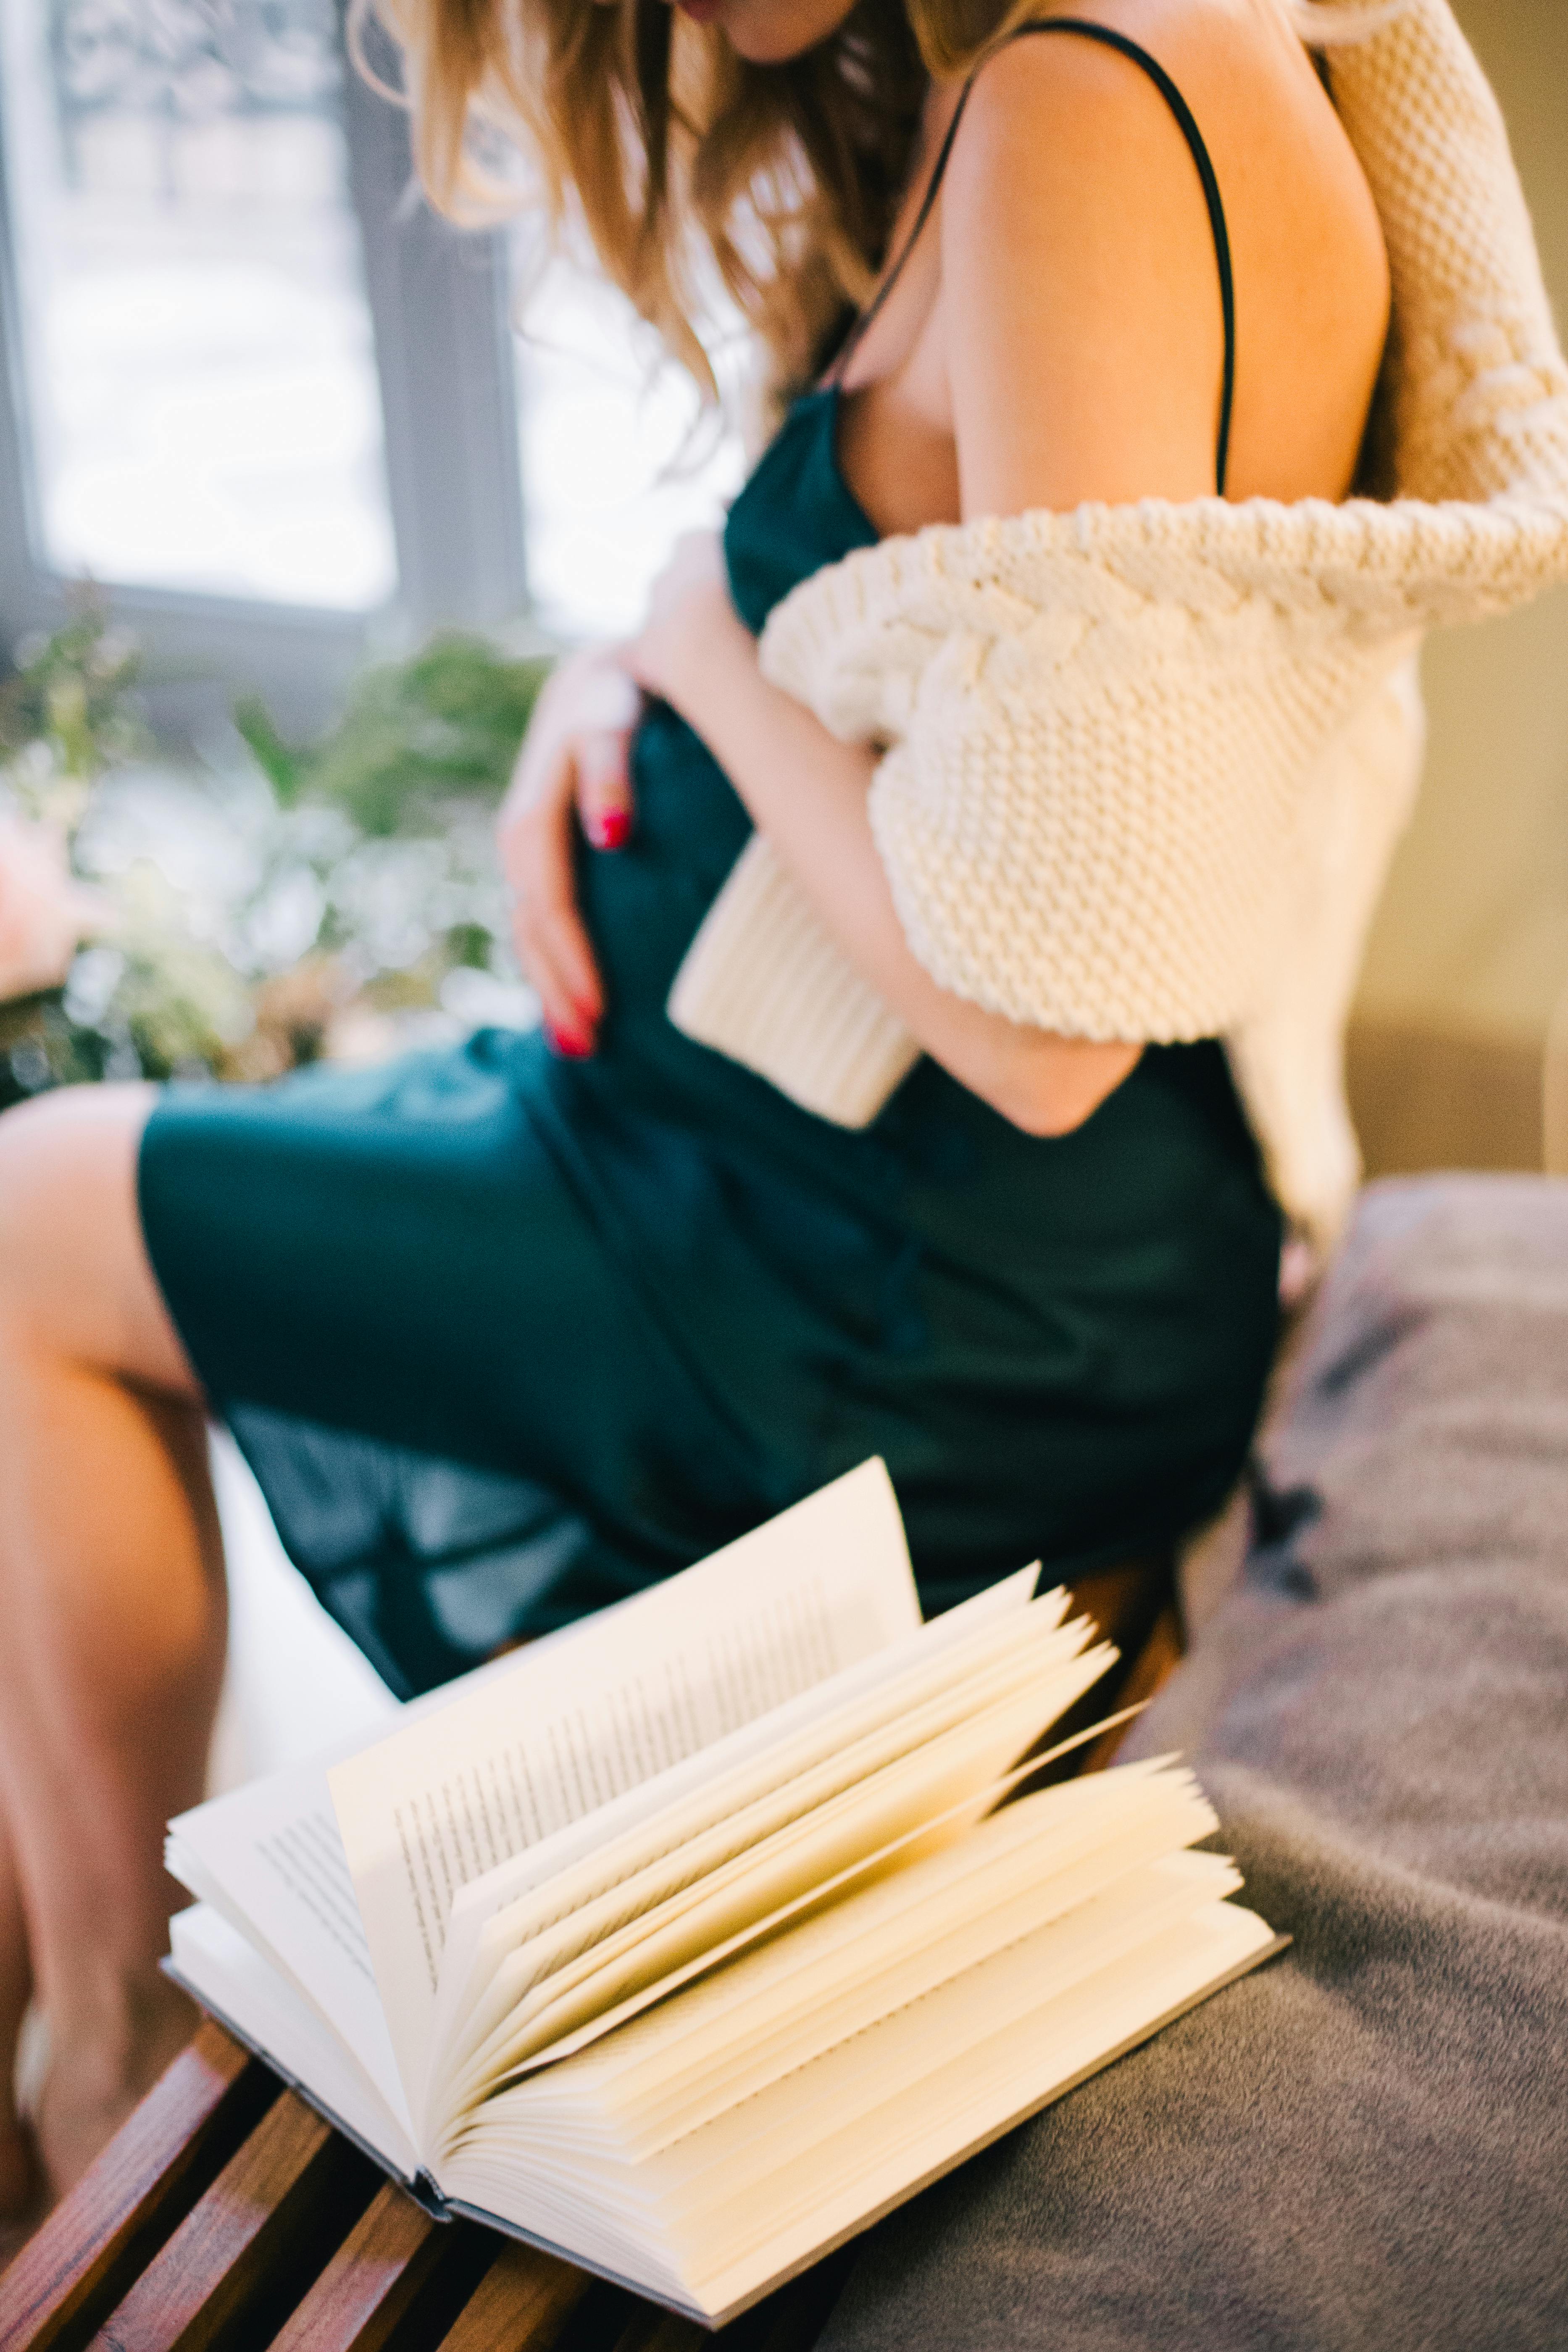 Schwangere Frau sitzt neben Buch | Quelle: Pexels